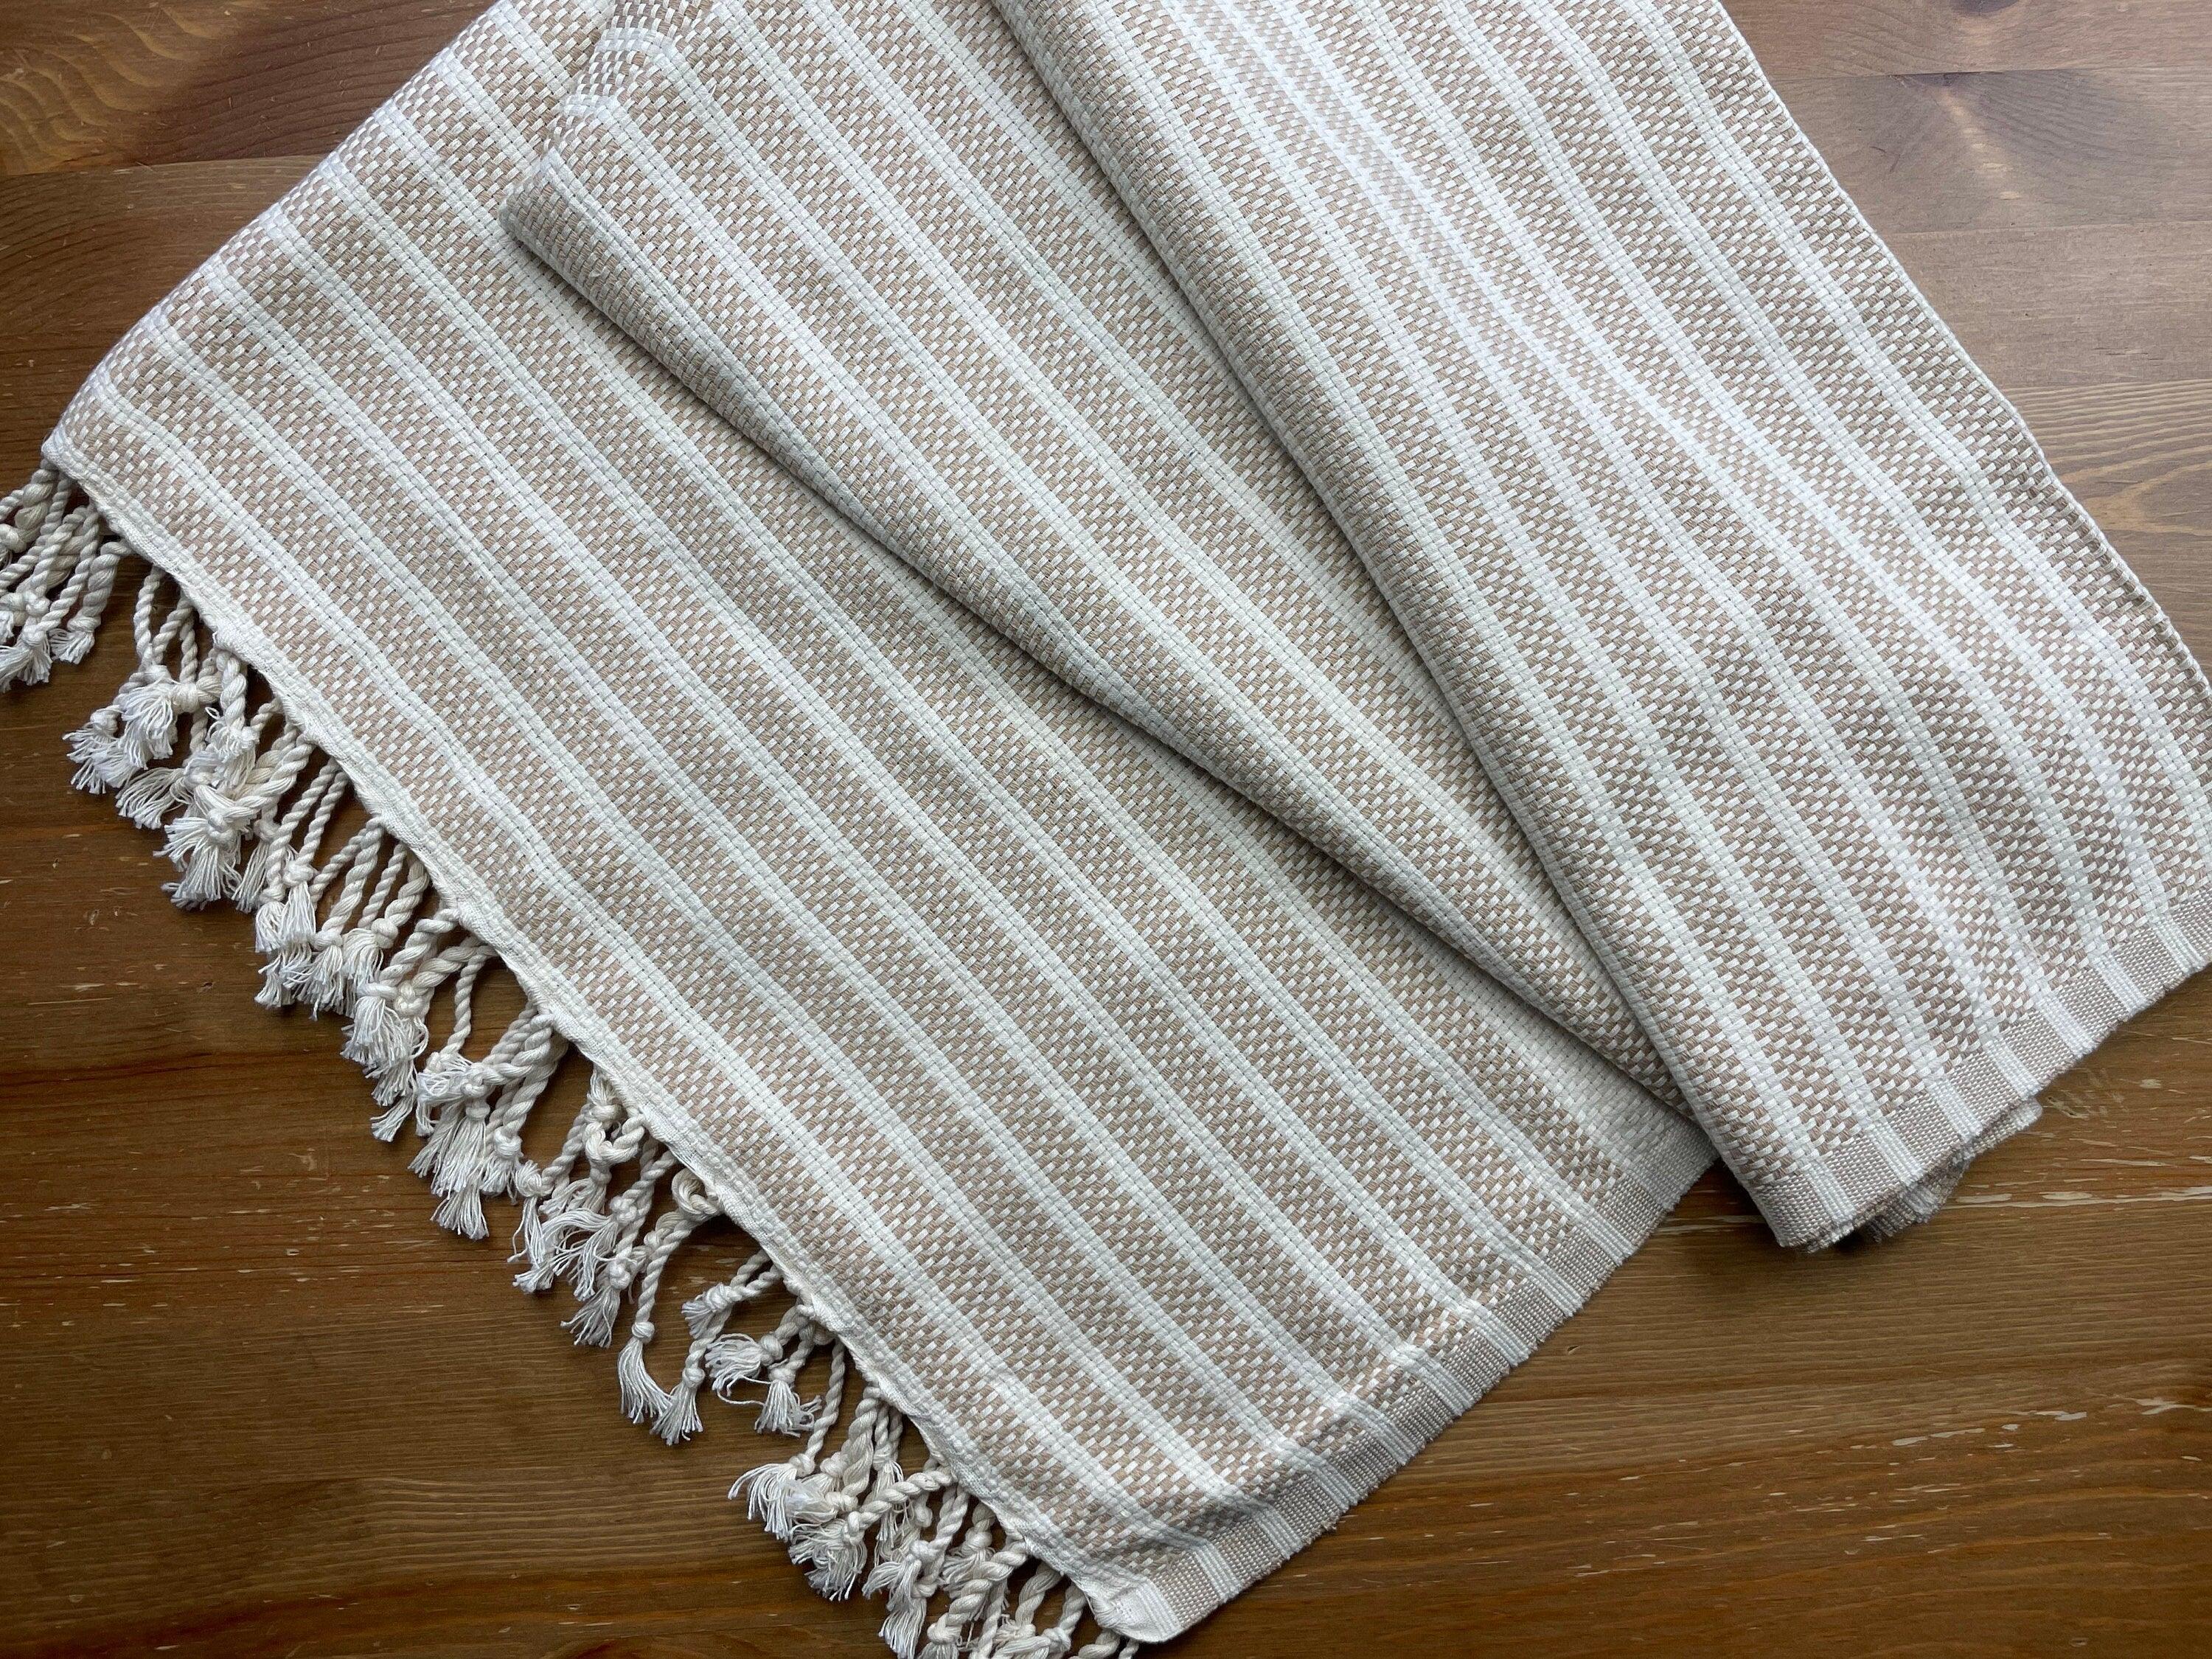 Elegant Turkish Peshtemal Towel, Turkish Bath Towel, Cotton Bath Towel, 100% Cotton Towel, Turkish Towel Beach, Striped Peshtemal, Holiday Towels available at Moyoni Design